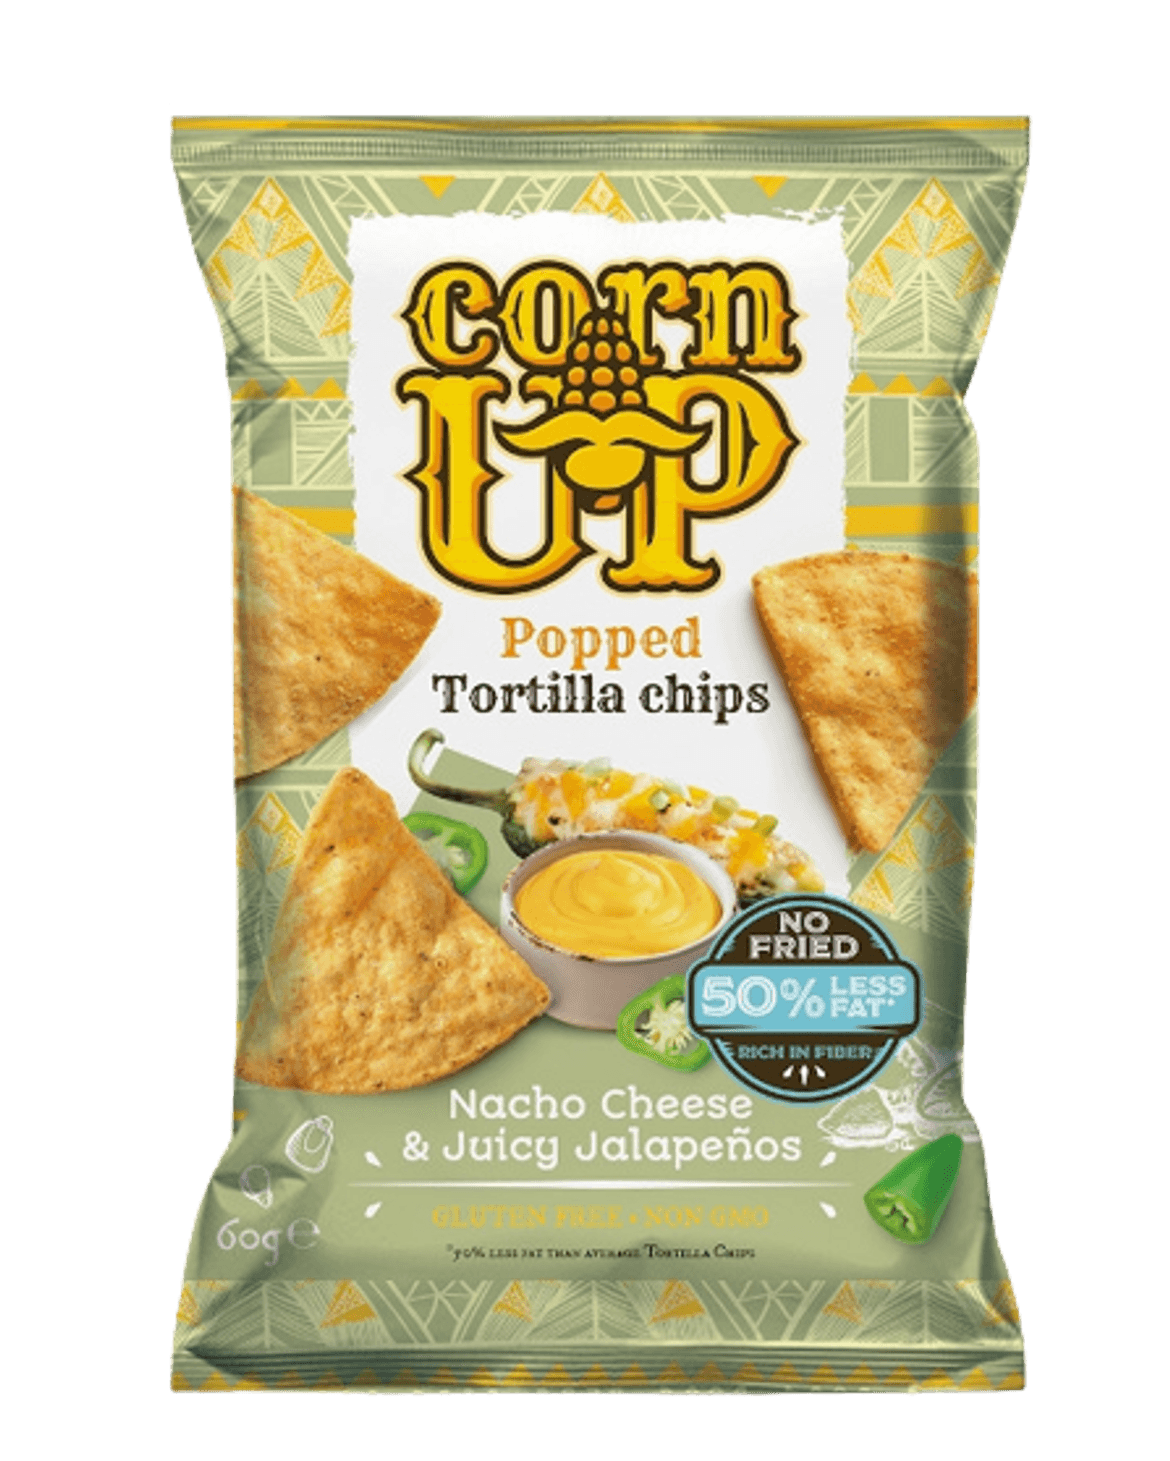 Corn UP Popped Tortilla Chips nacho sajt és jalapeno ízesítéssel